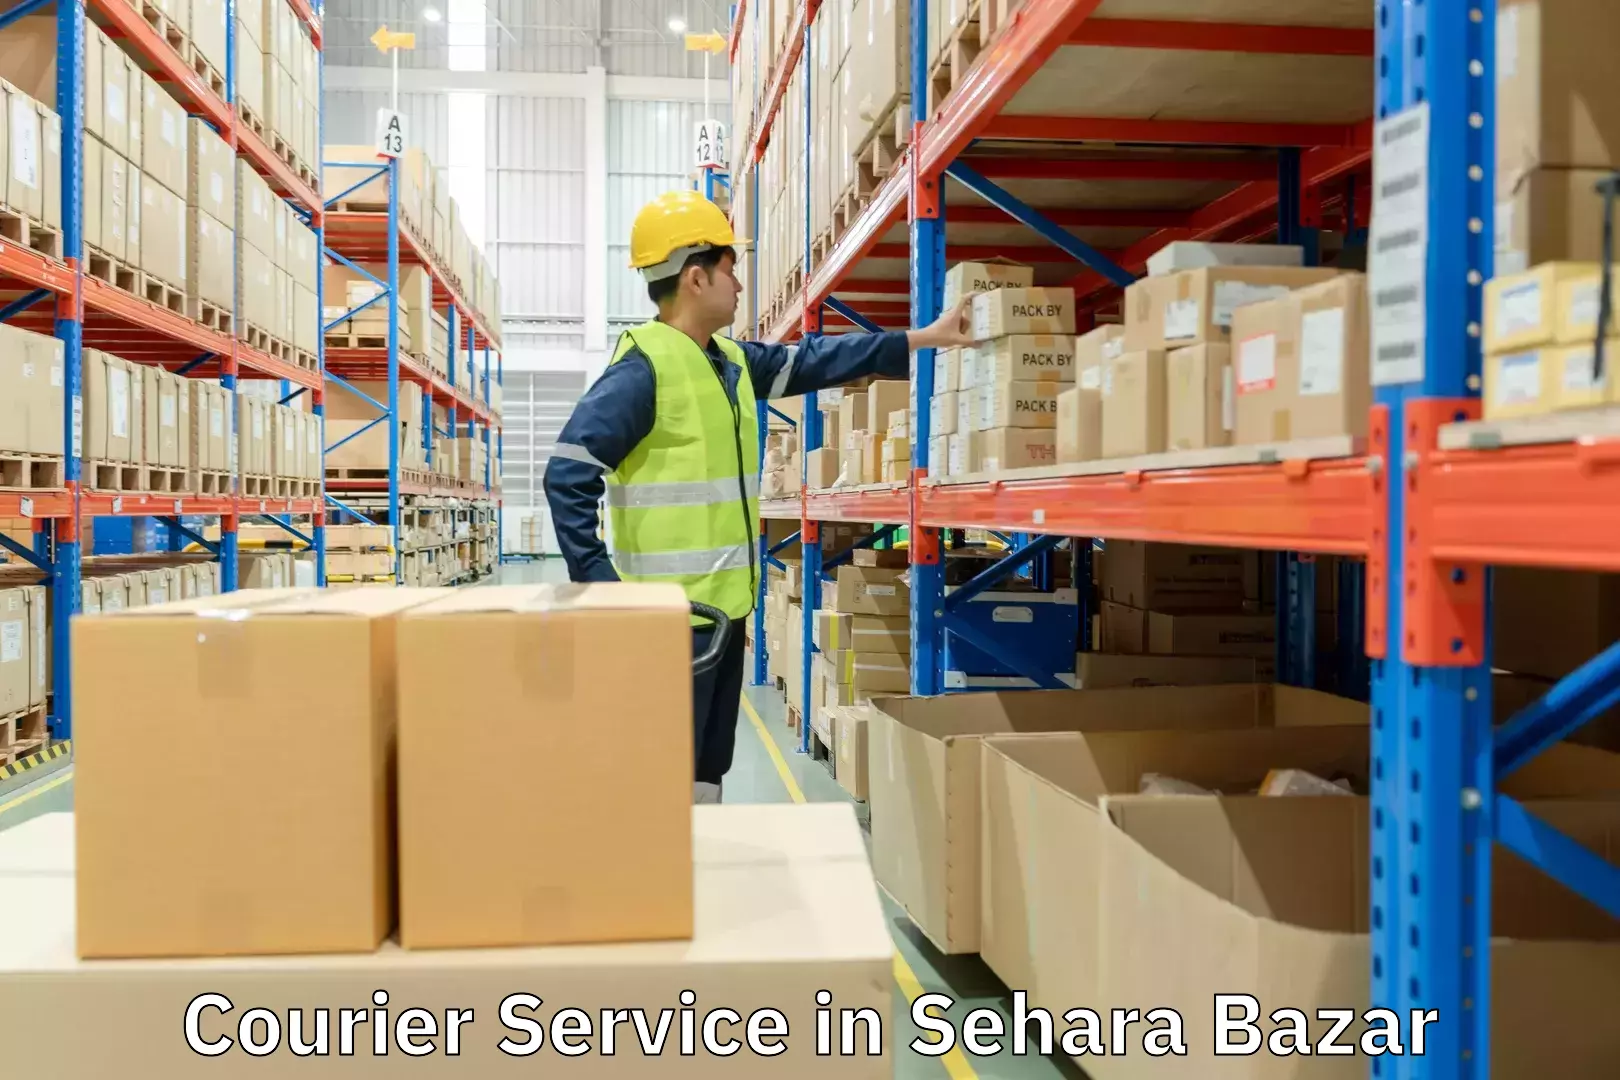 Air courier services in Sehara Bazar